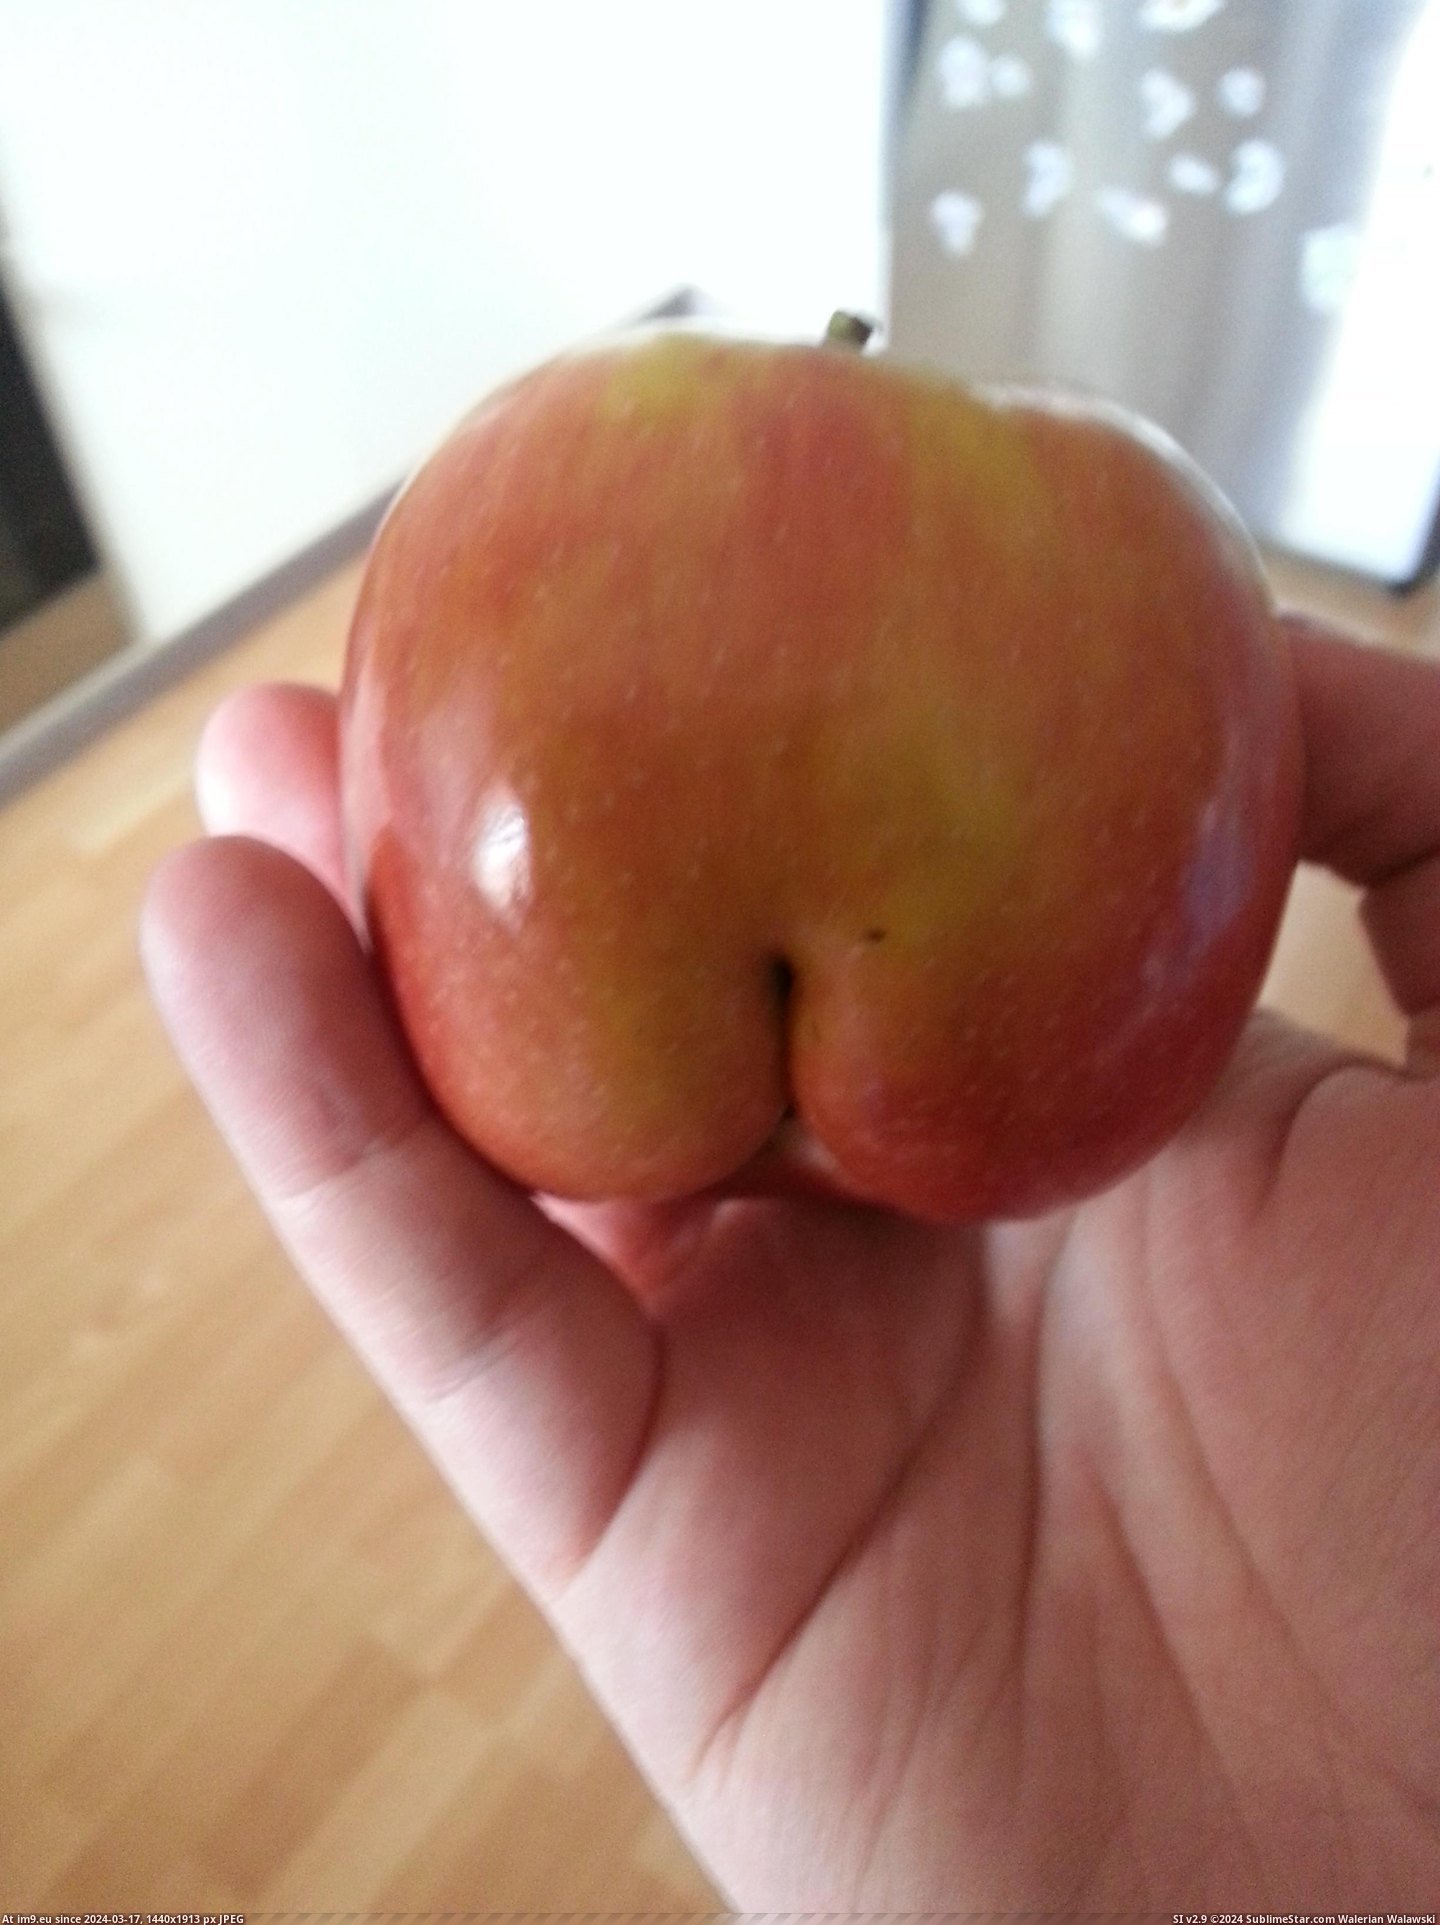 #Apple  #Bum [Mildlyinteresting] My apple has a bum Pic. (Bild von album My r/MILDLYINTERESTING favs))